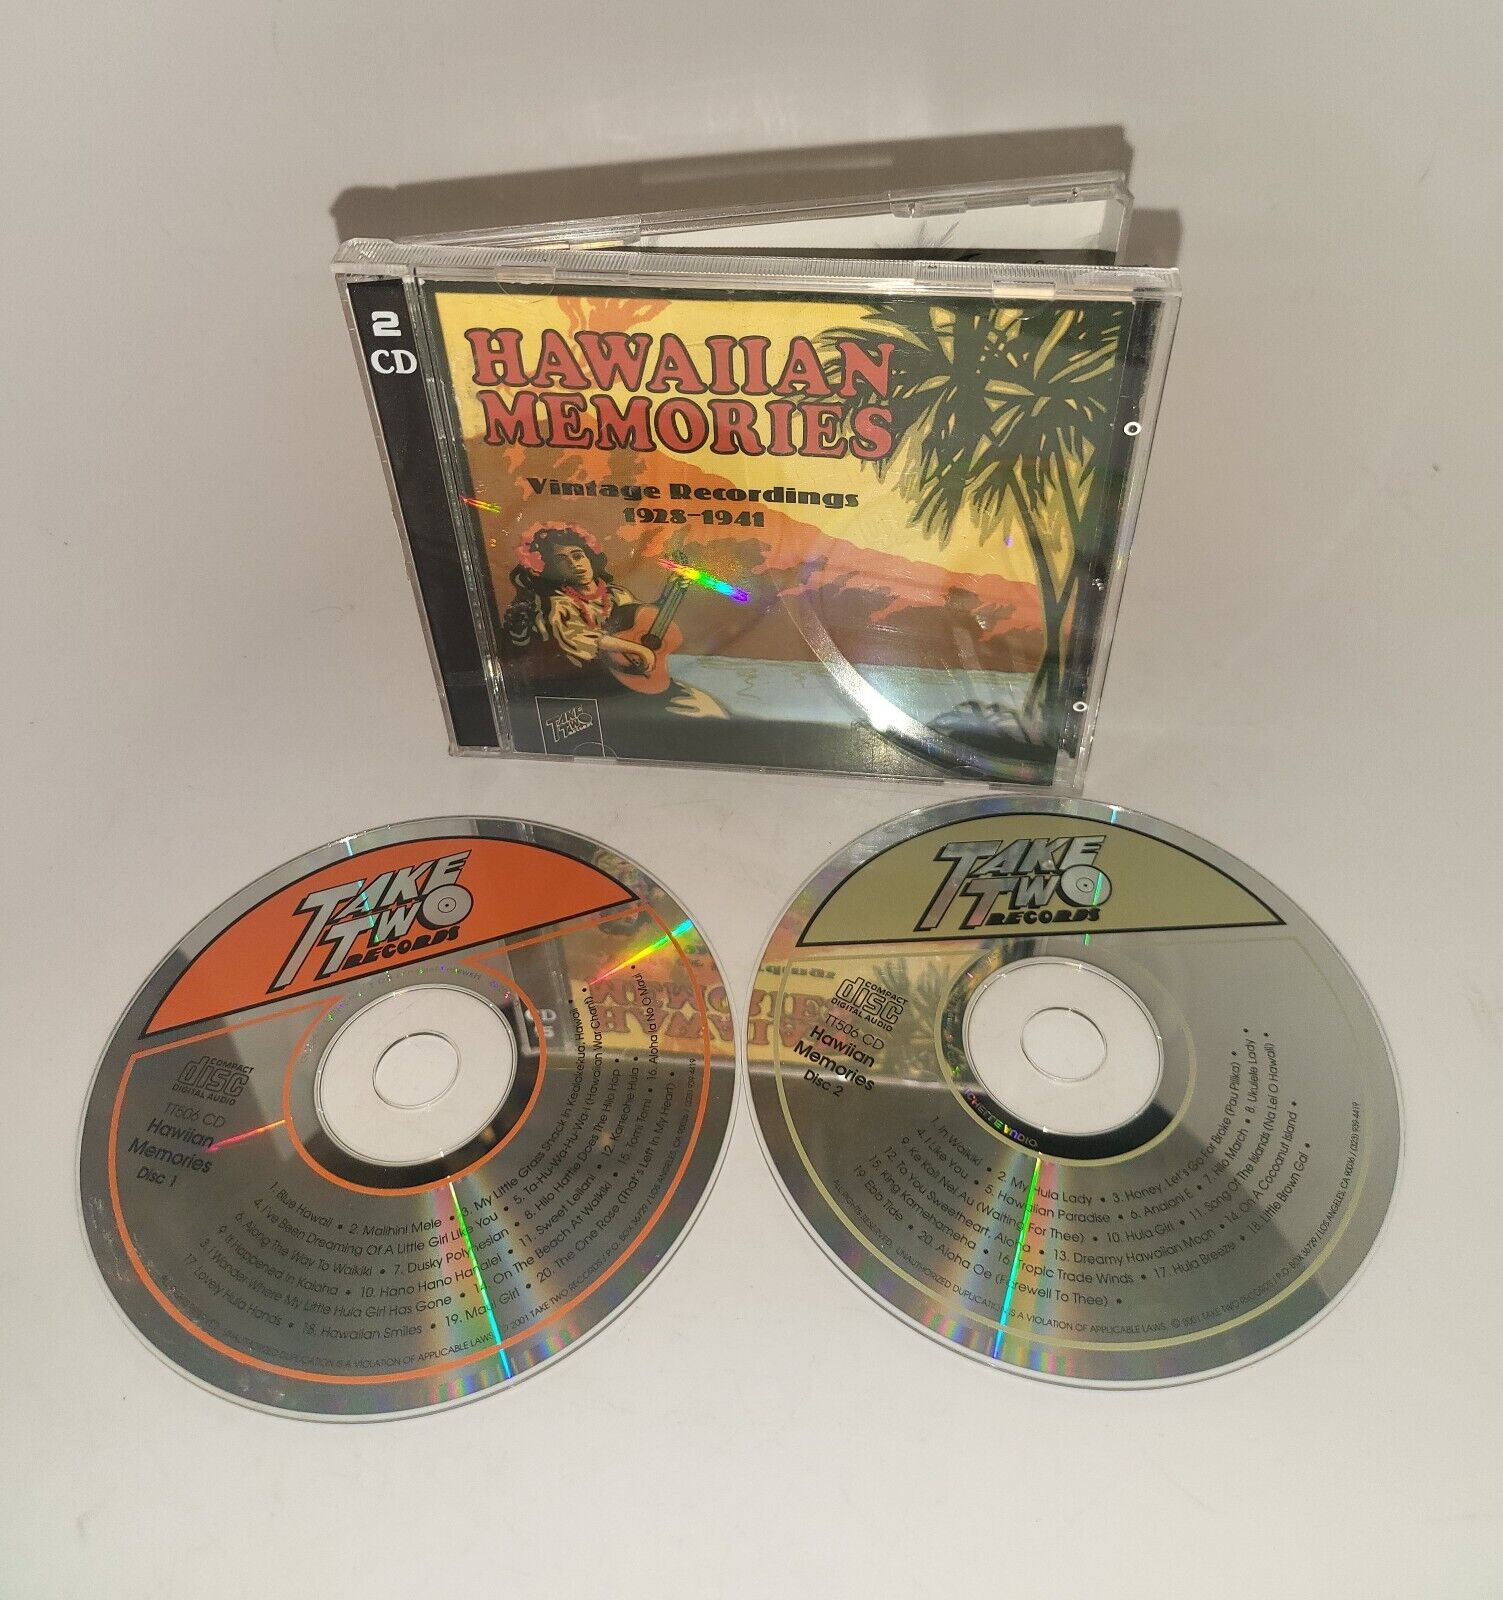 Hawaiian Memories: Vintage 1928-1941 (2 CD Set) Take Two Records